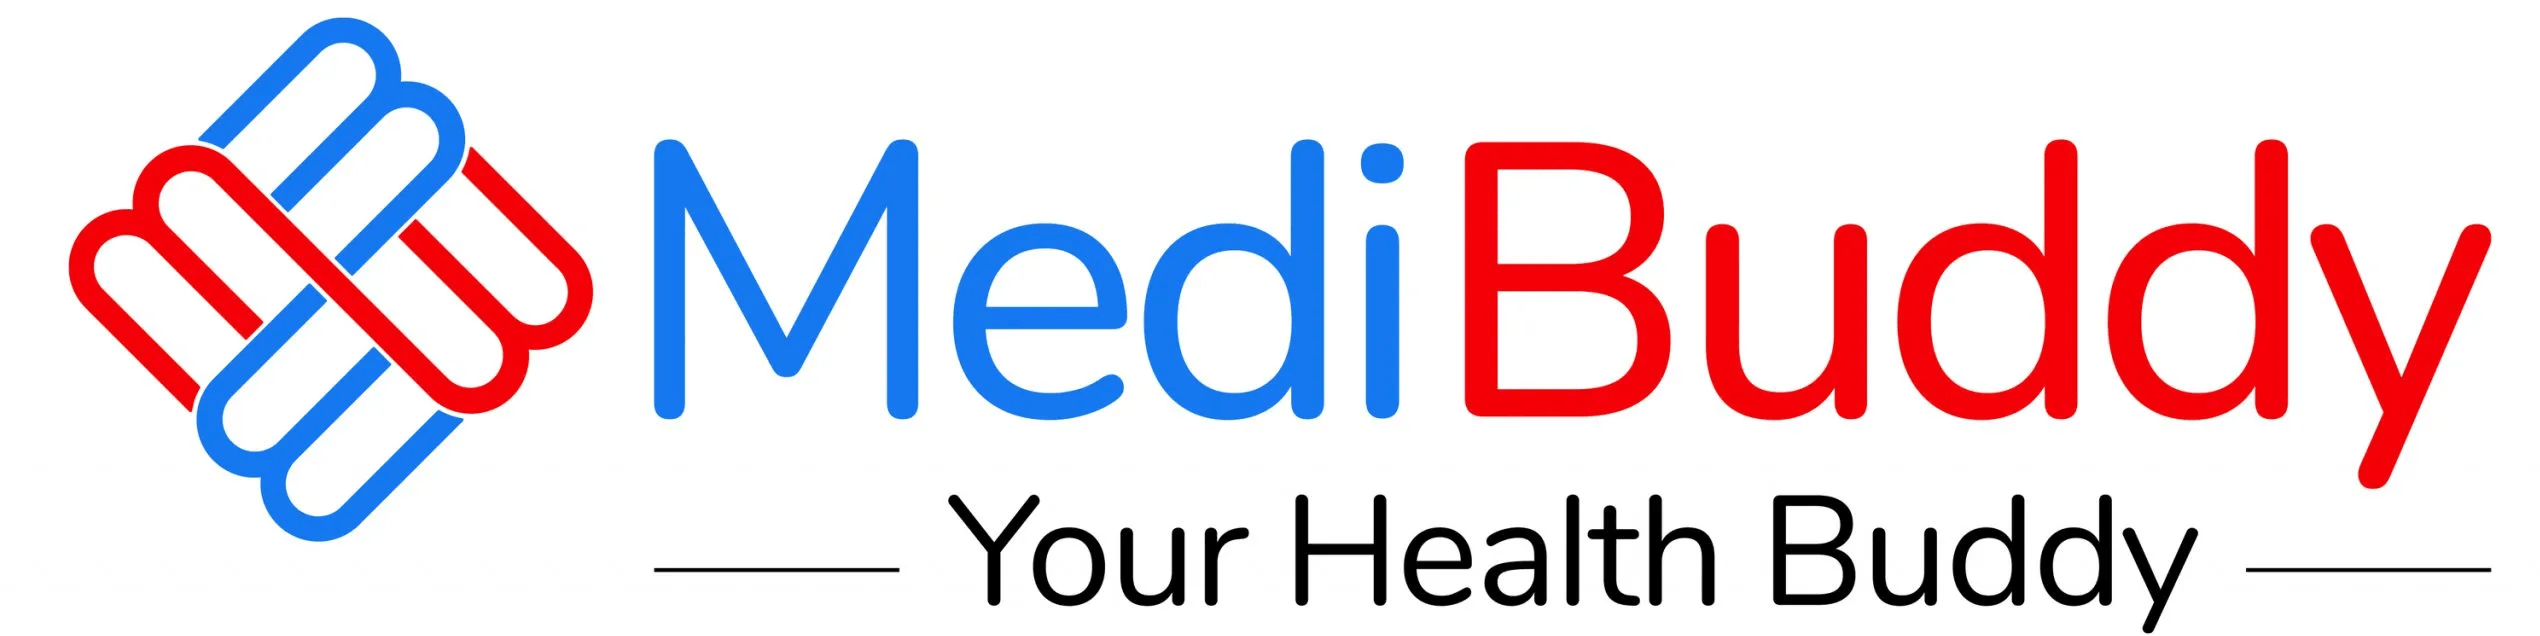 Medibuddy Banner